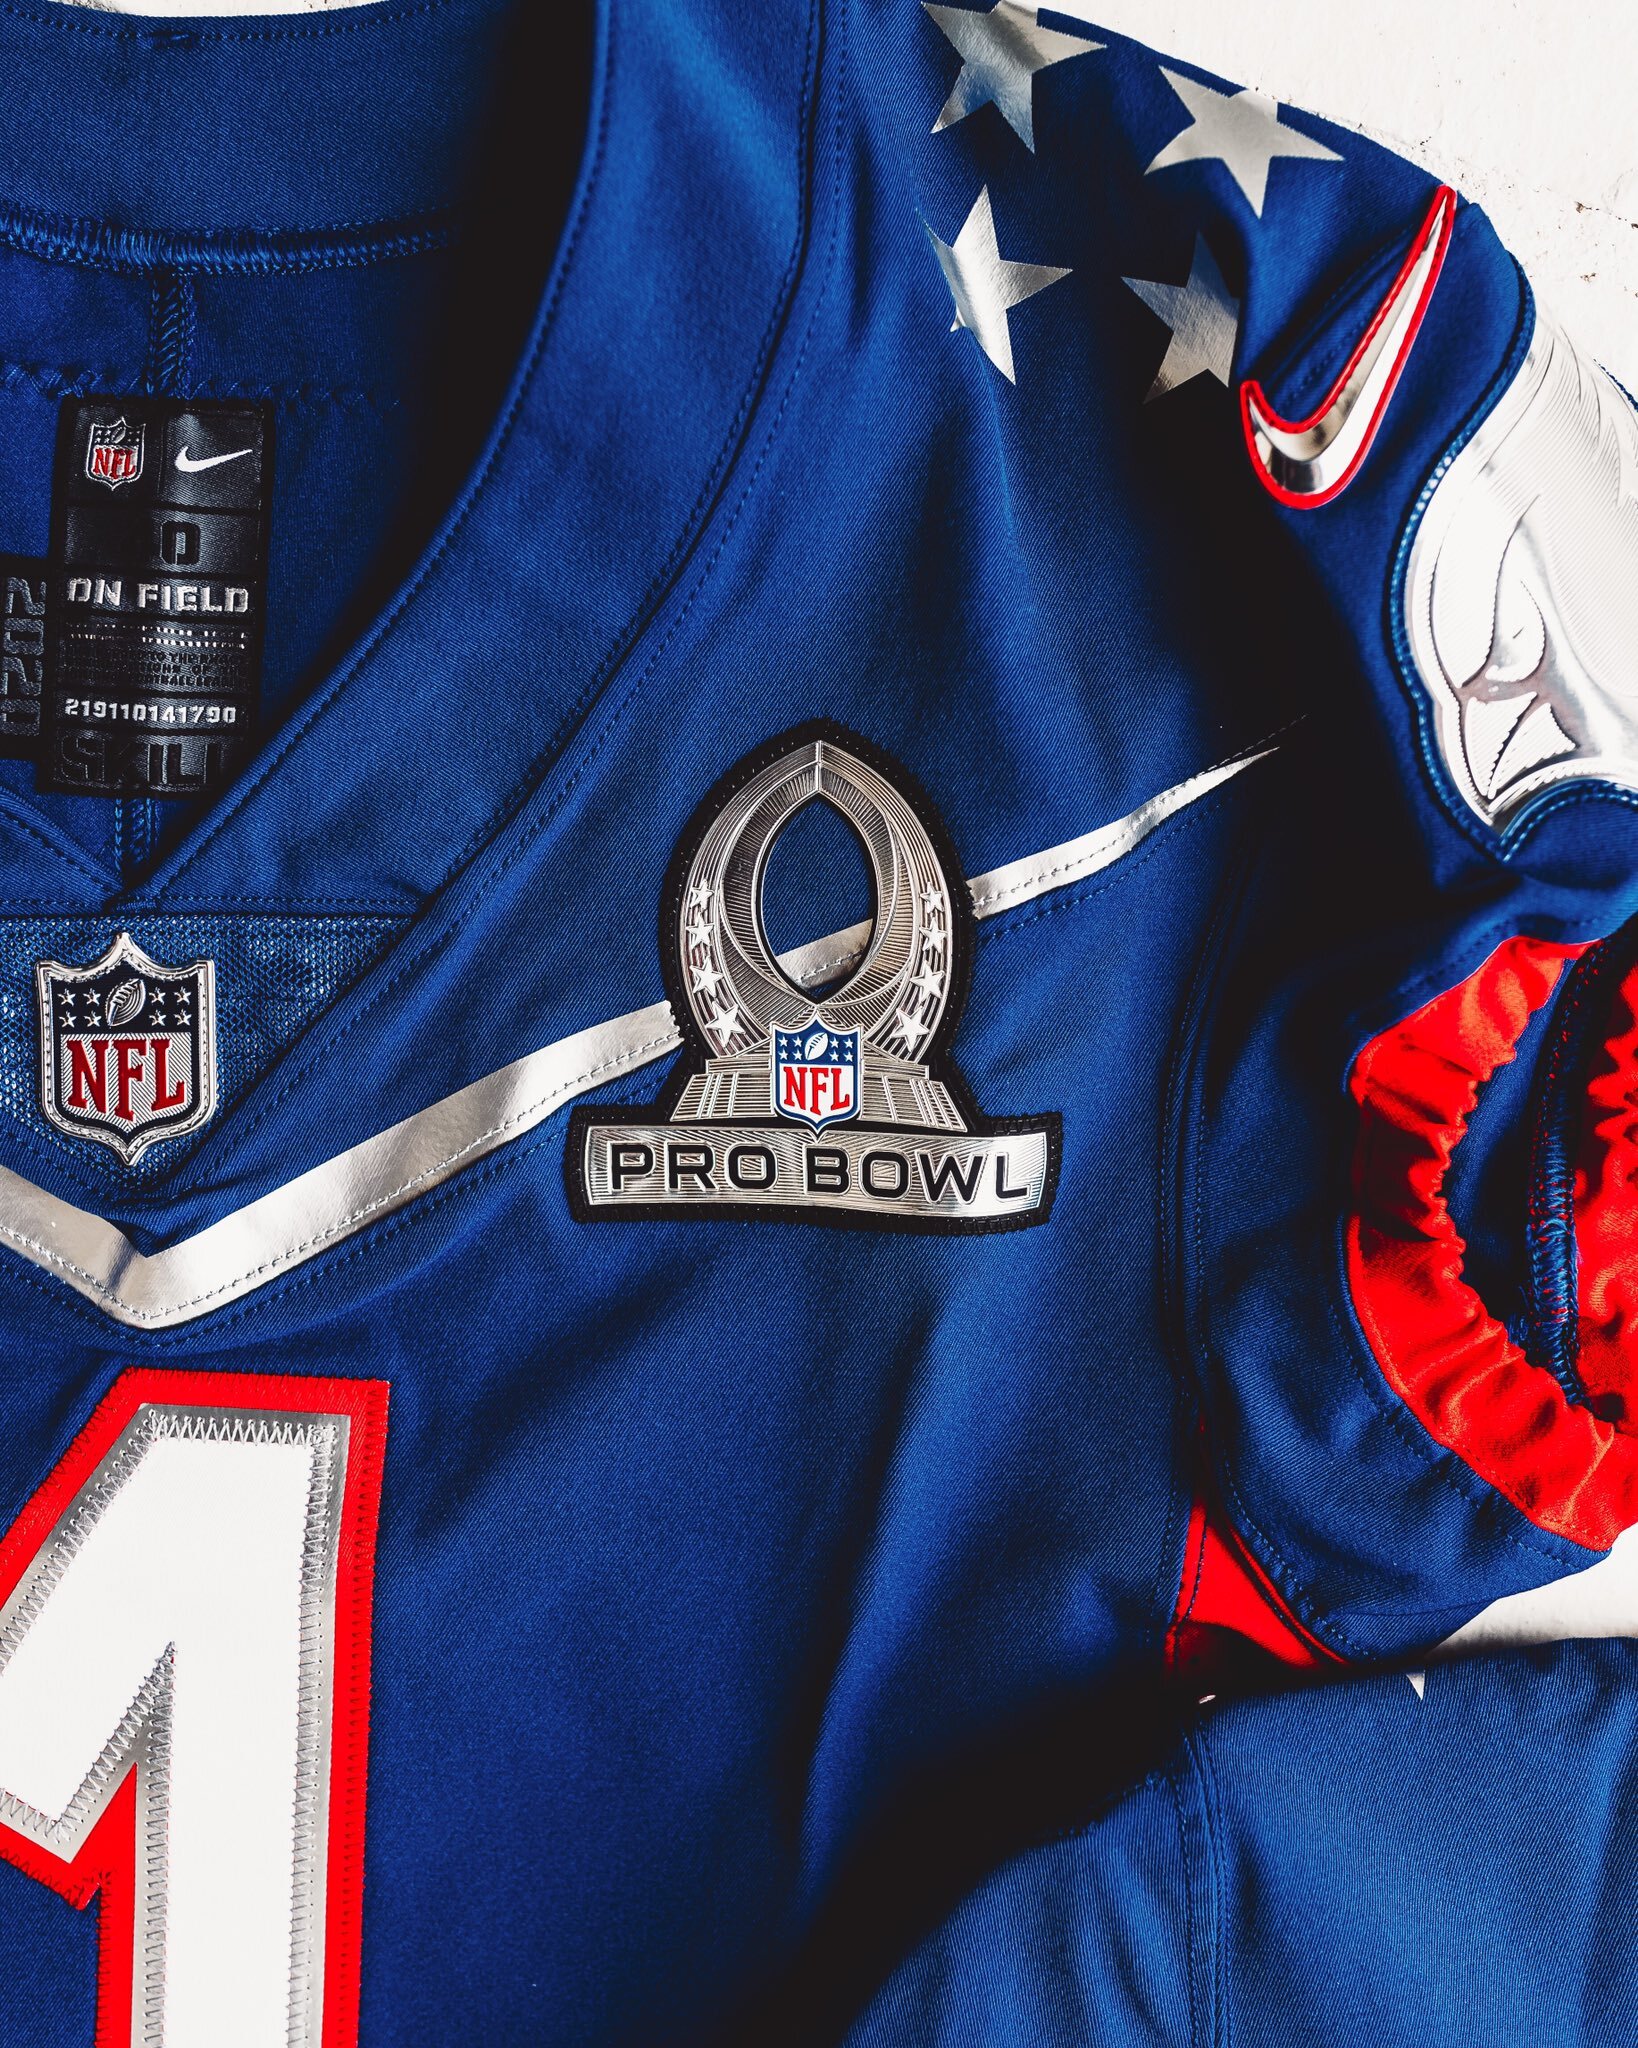 NFL Pro Bowl 2016 Football Jerseys, Hats & Gear